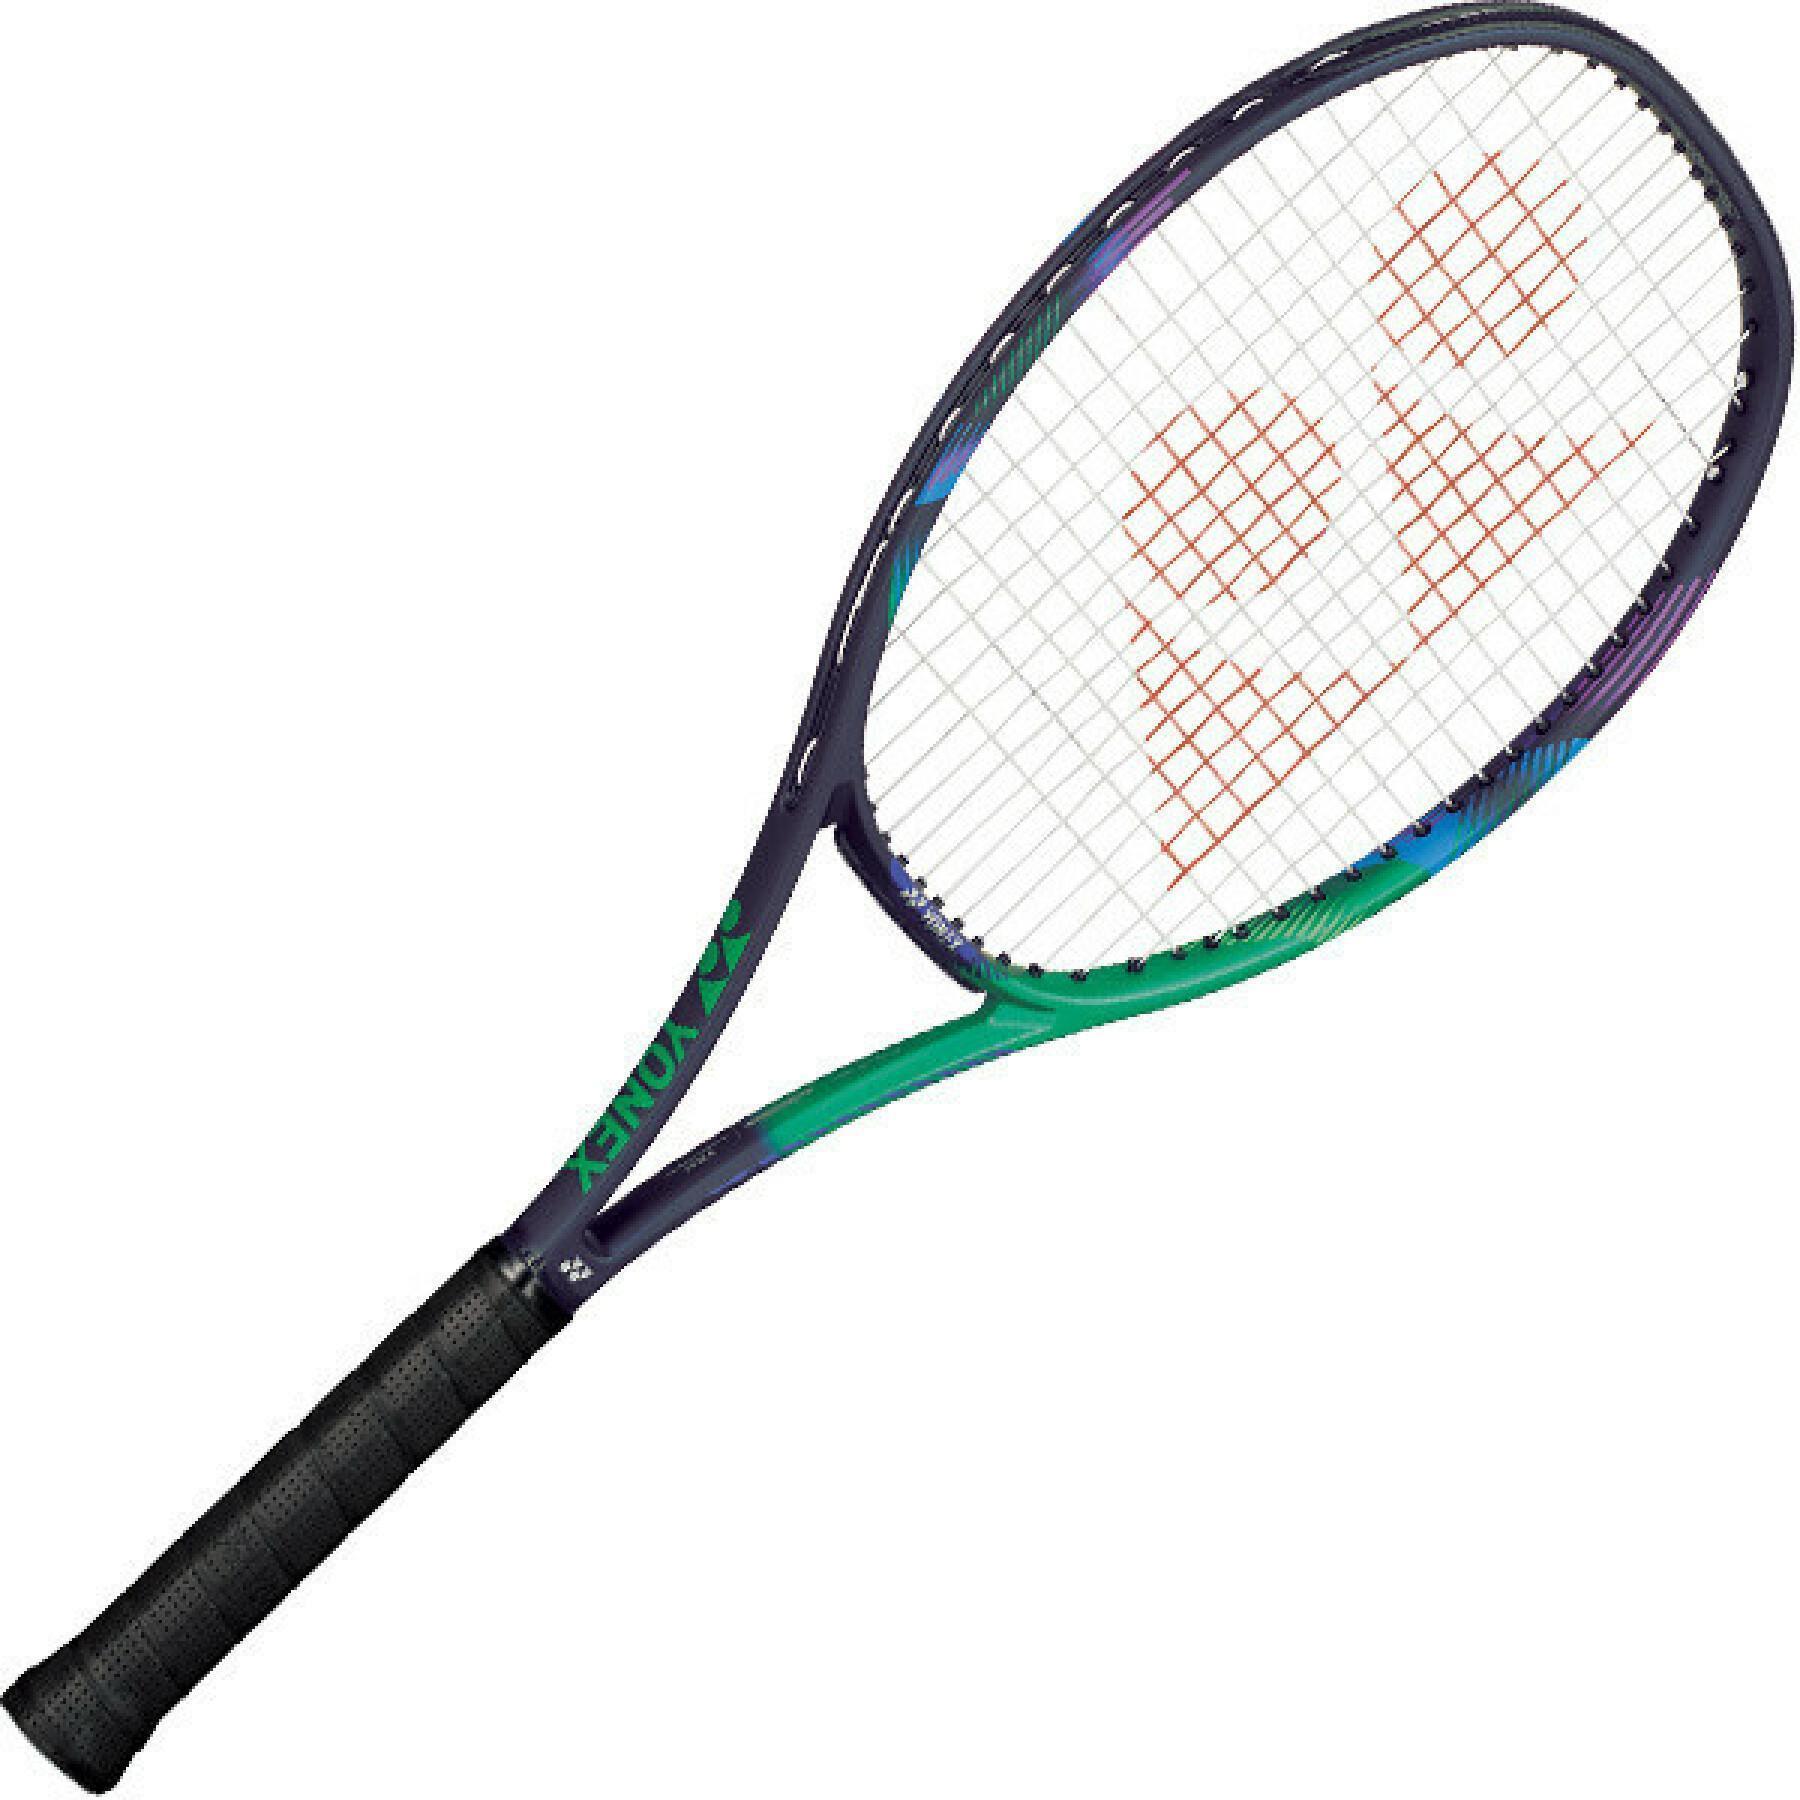 Tennis racket Yonex raq vcore pro 97